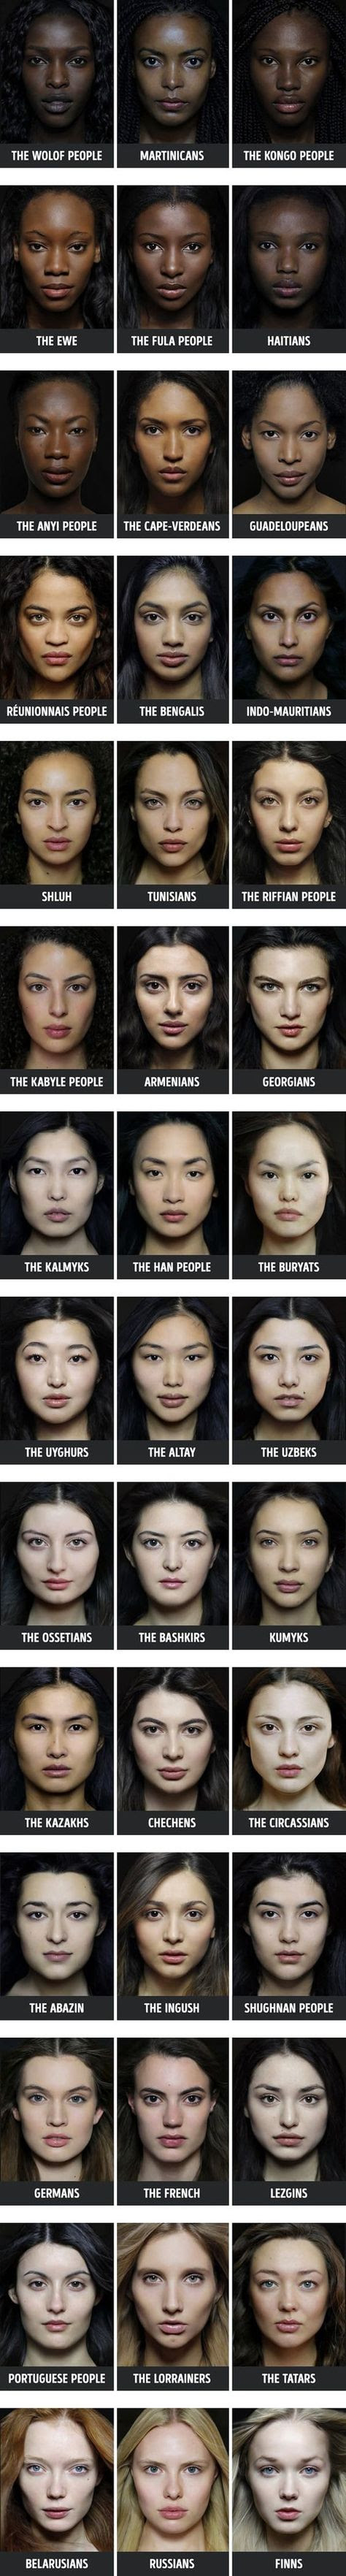 Ethnic Origins of Beauty